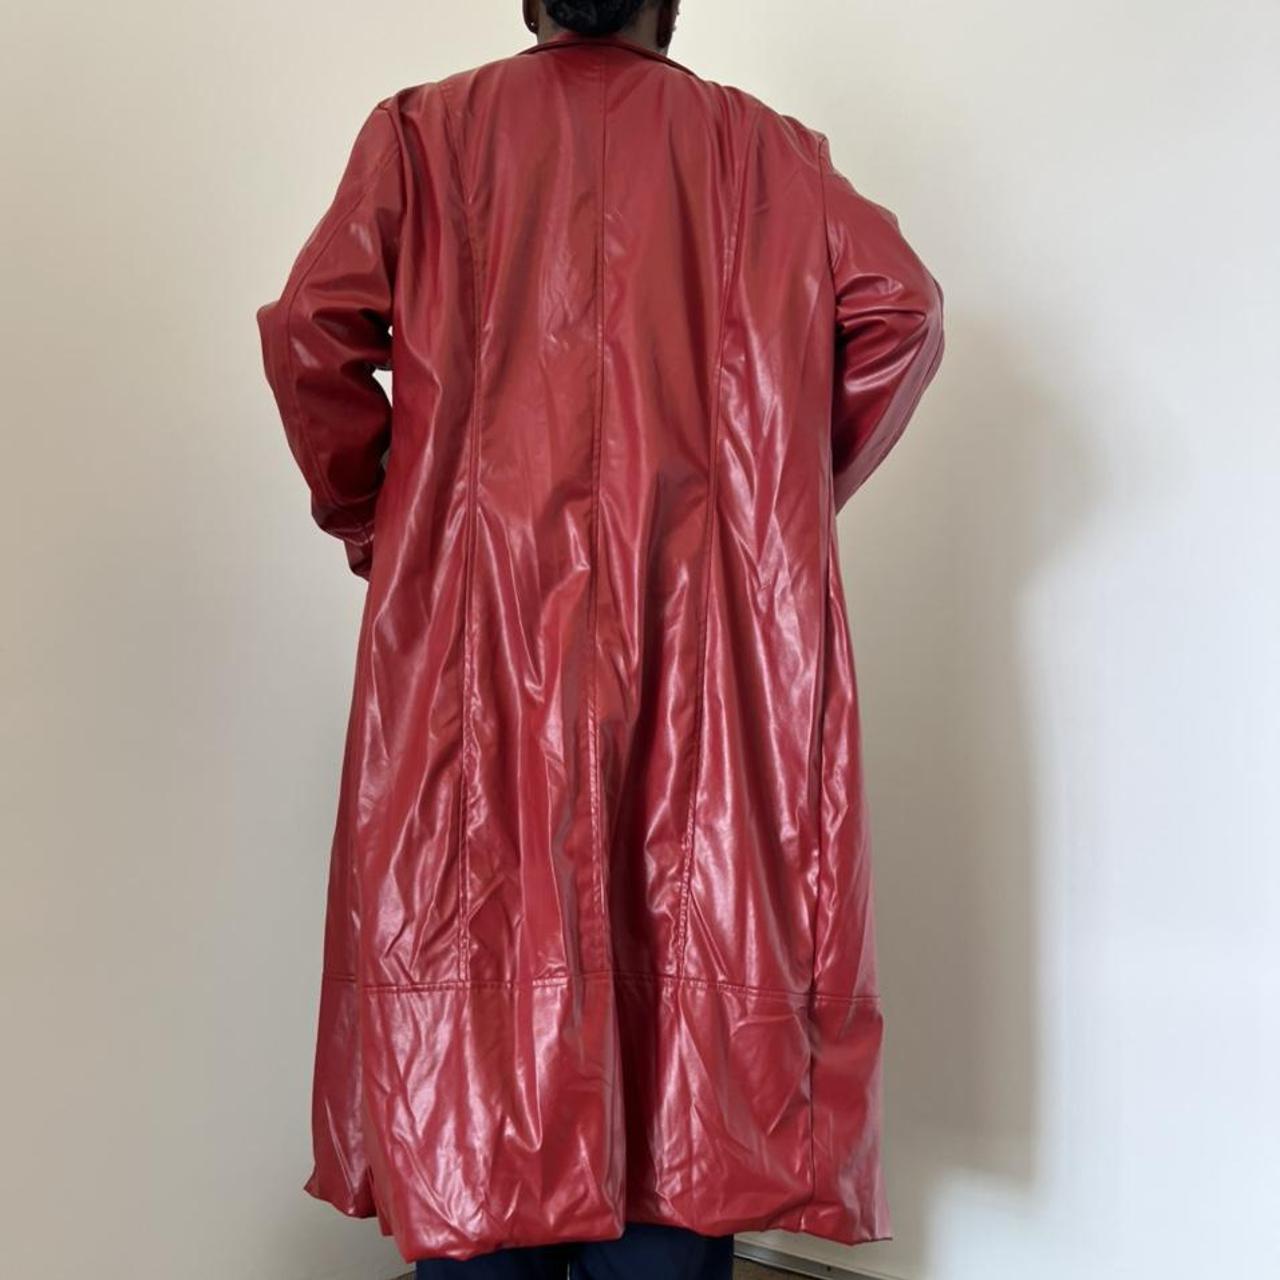 Red long faux leather jacket coat 😍 lightweight so... - Depop